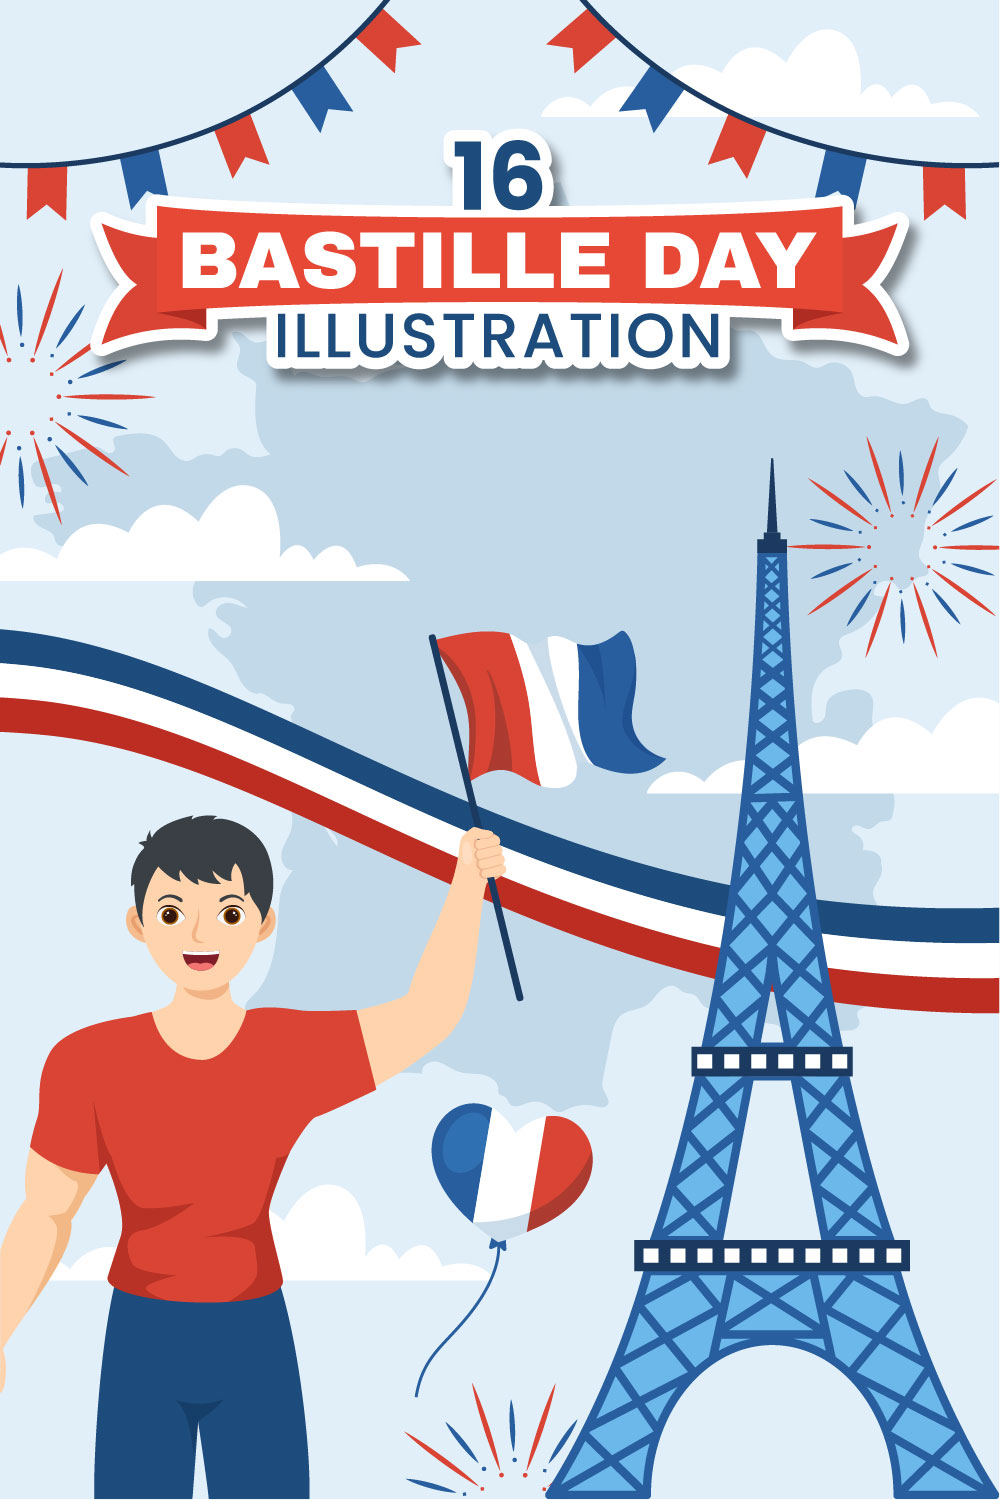 16 Happy Bastille Day Illustration pinterest preview image.